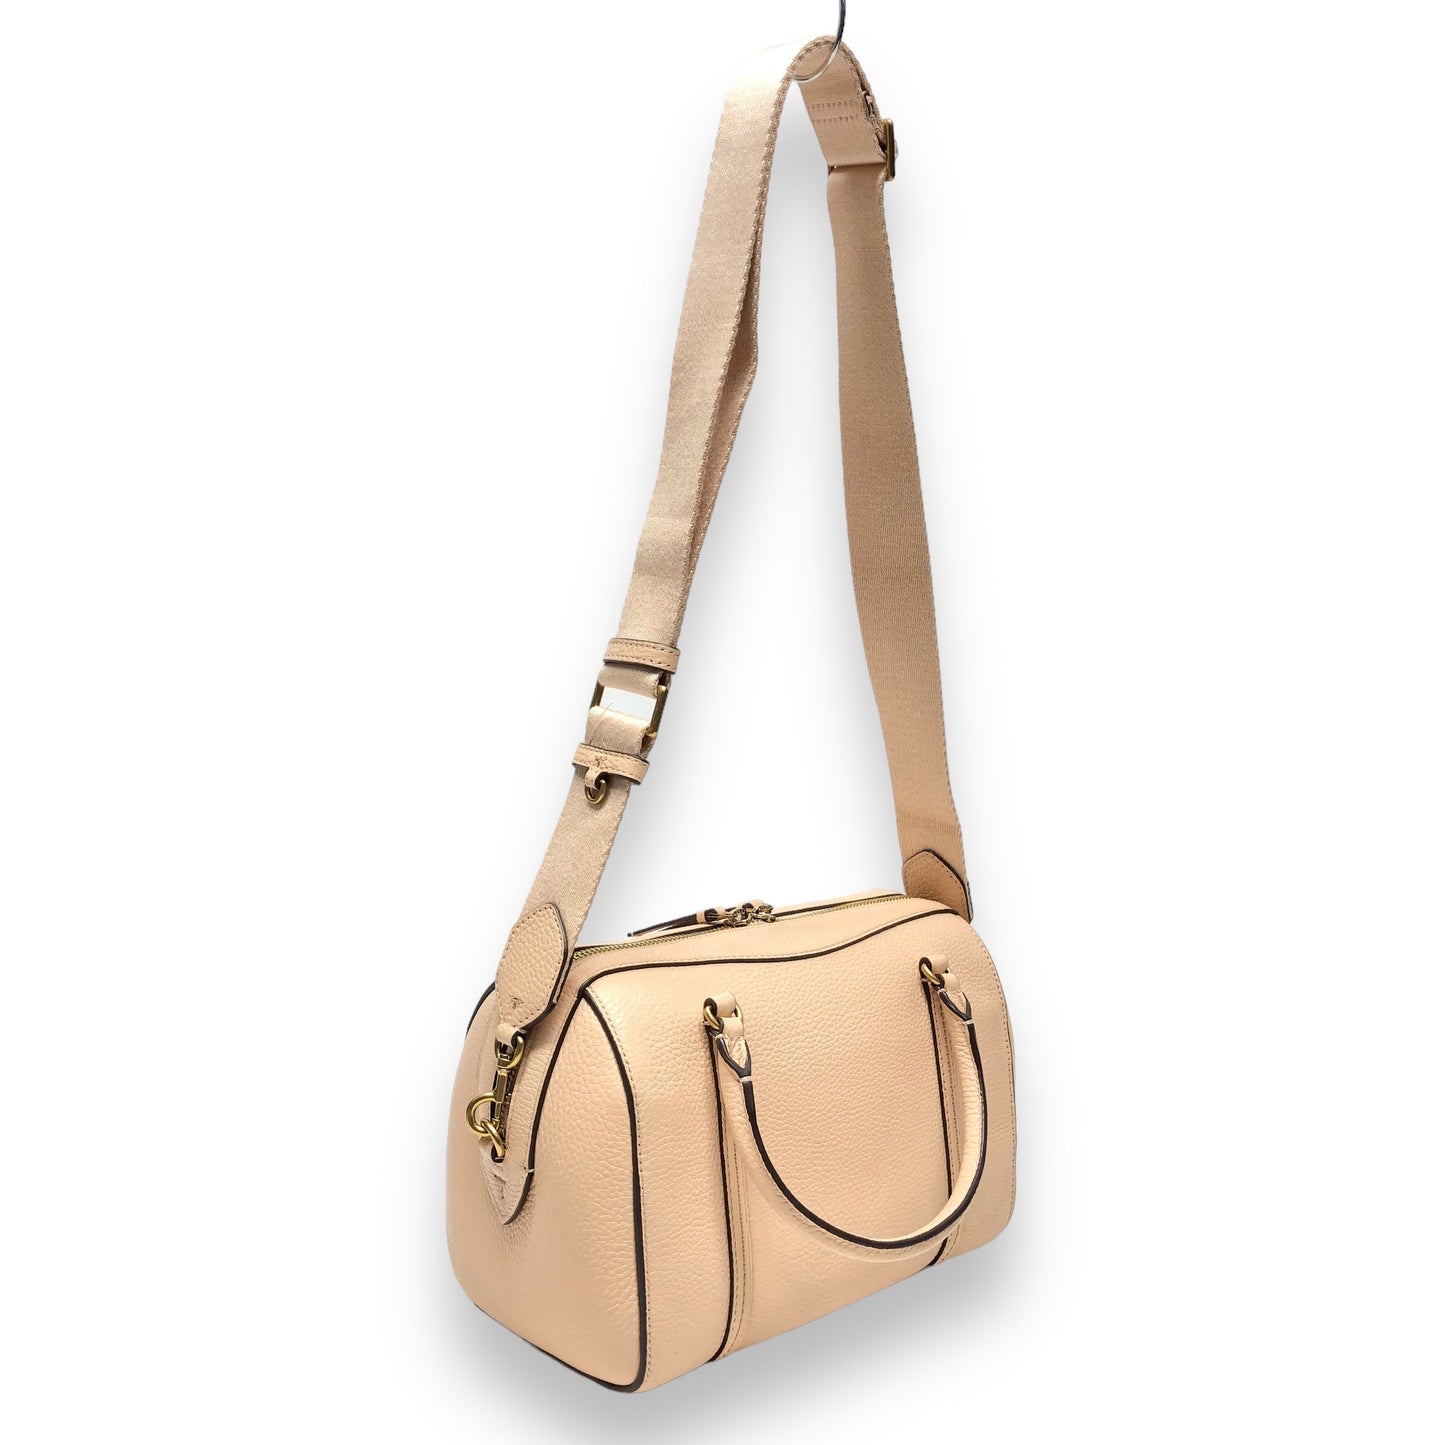 Tan Handbag Designer Tory Burch, Size Medium